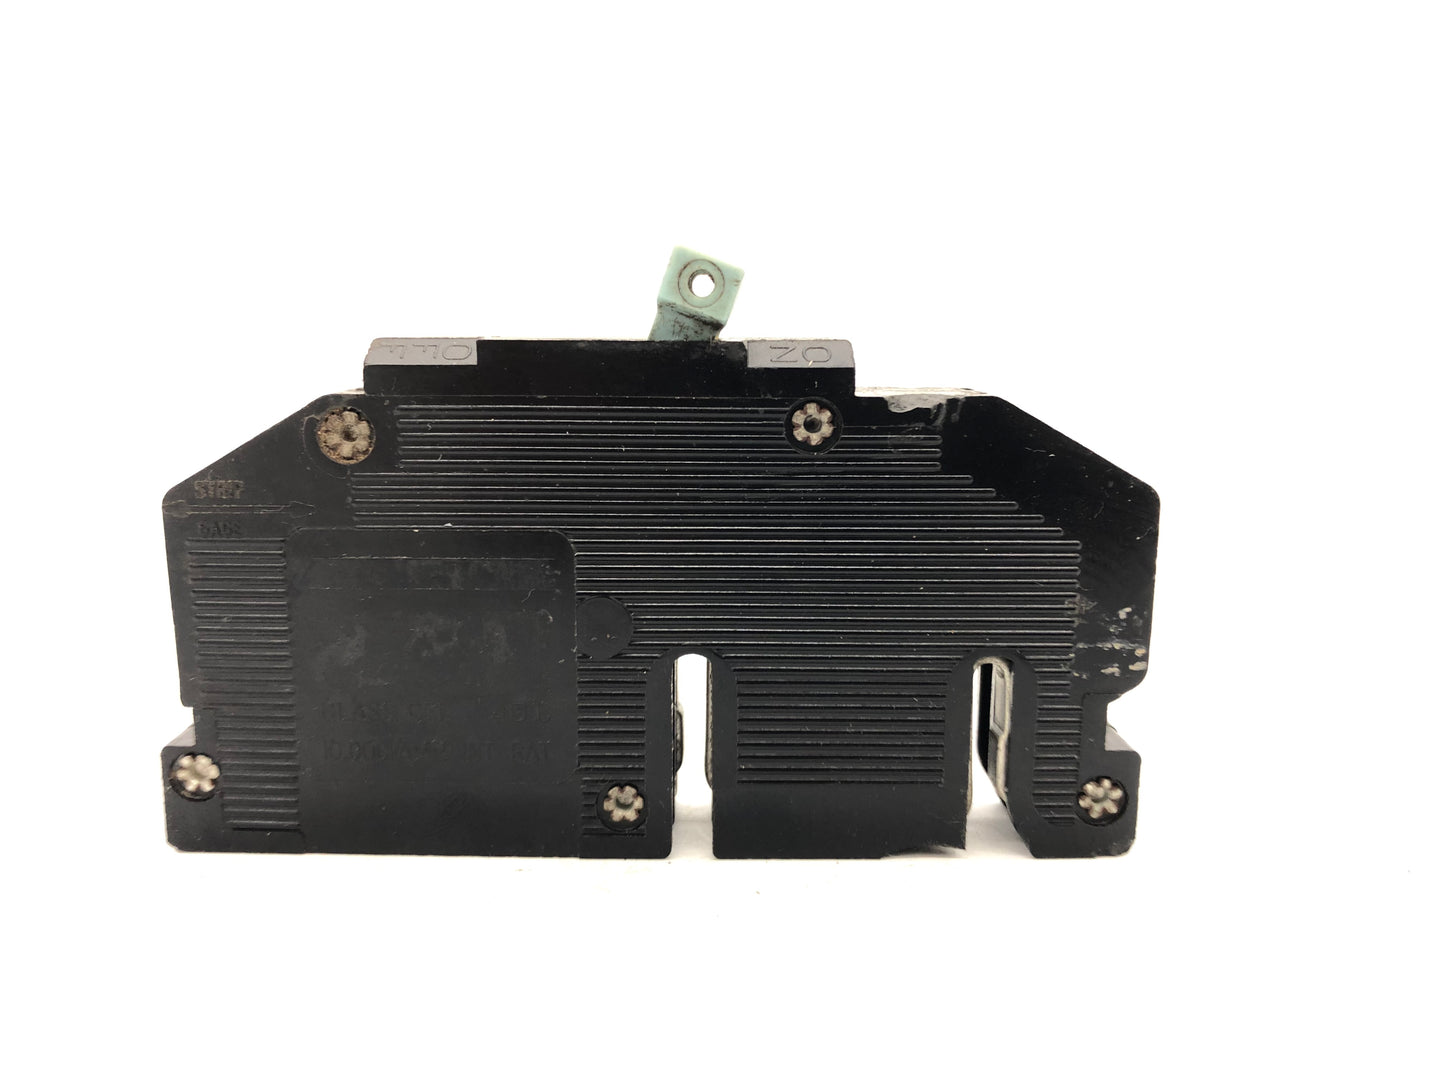 Zinsco R3830 30/30Amp Tandem 120V Circuit Breaker - Reconditioned